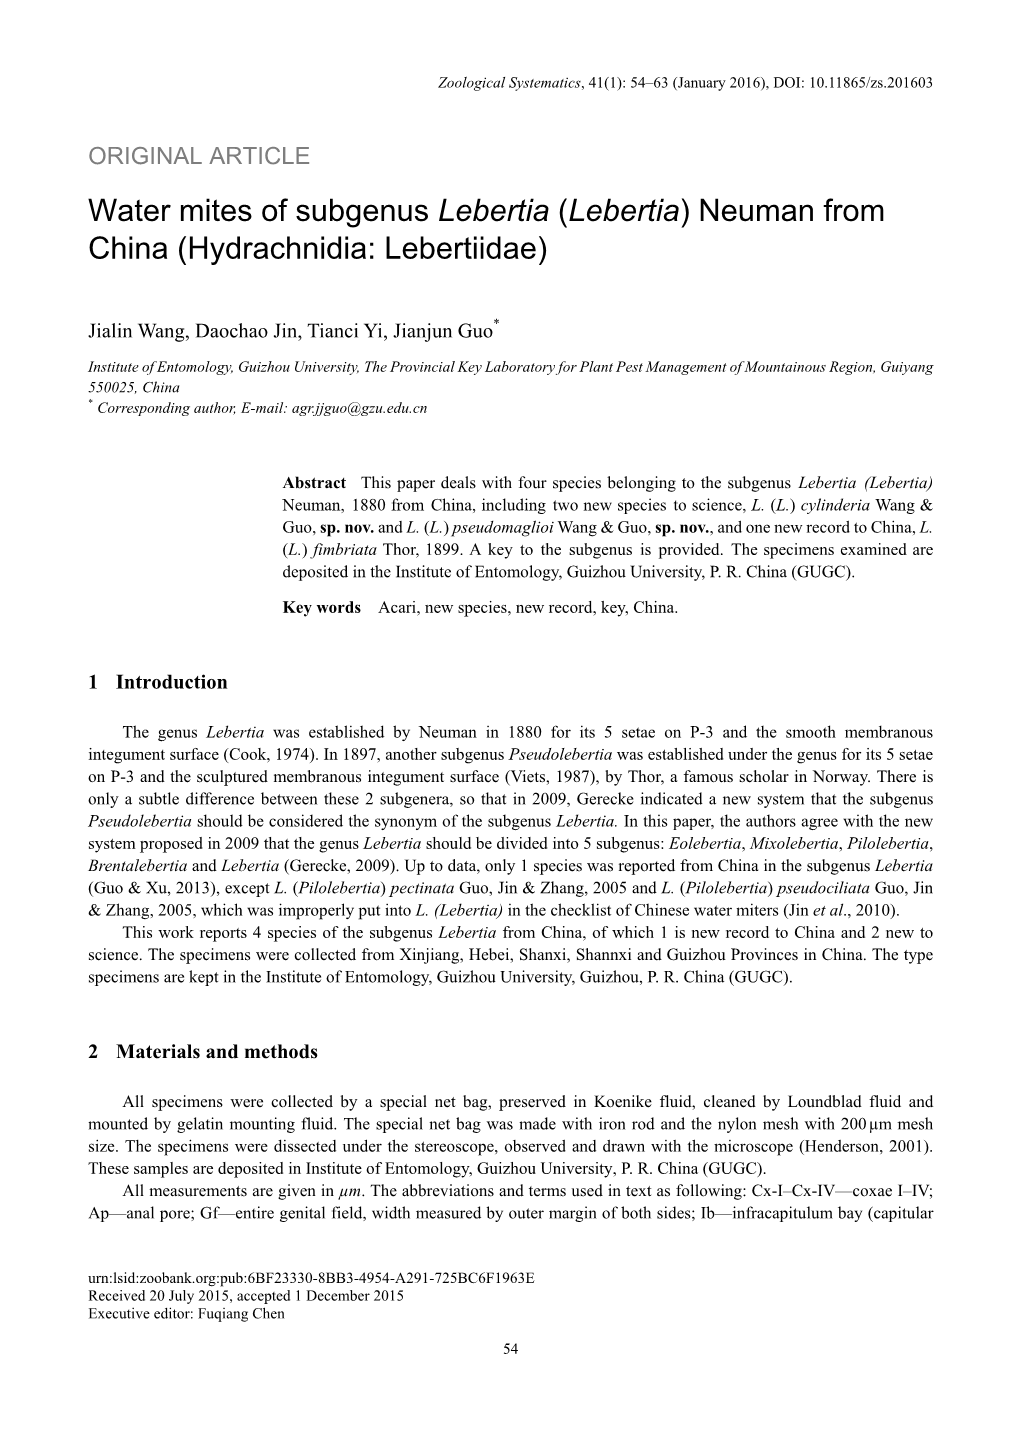 Lebertia) Neuman from China (Hydrachnidia: Lebertiidae